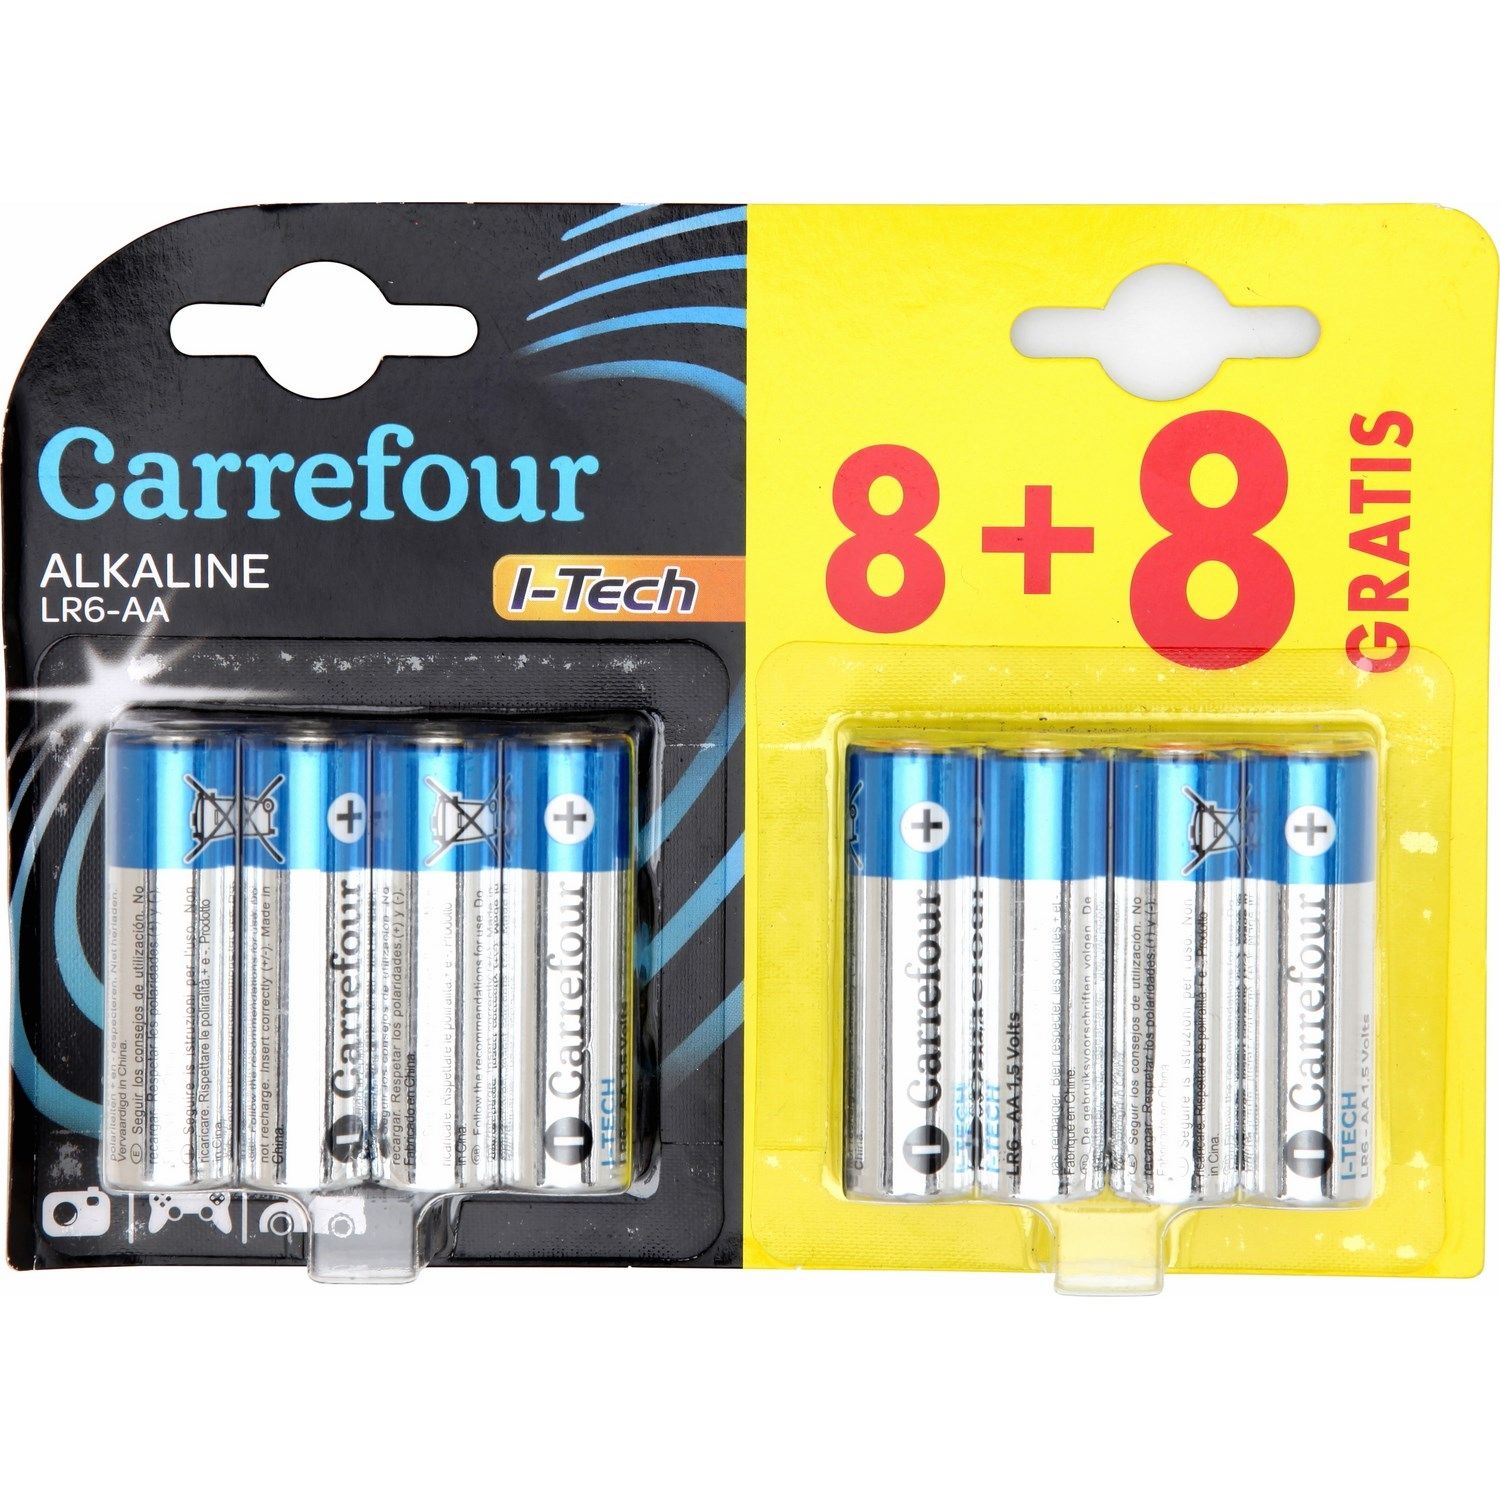 Baterie alkaliczne Carrefour AA 8+8 szt. GRATIS!